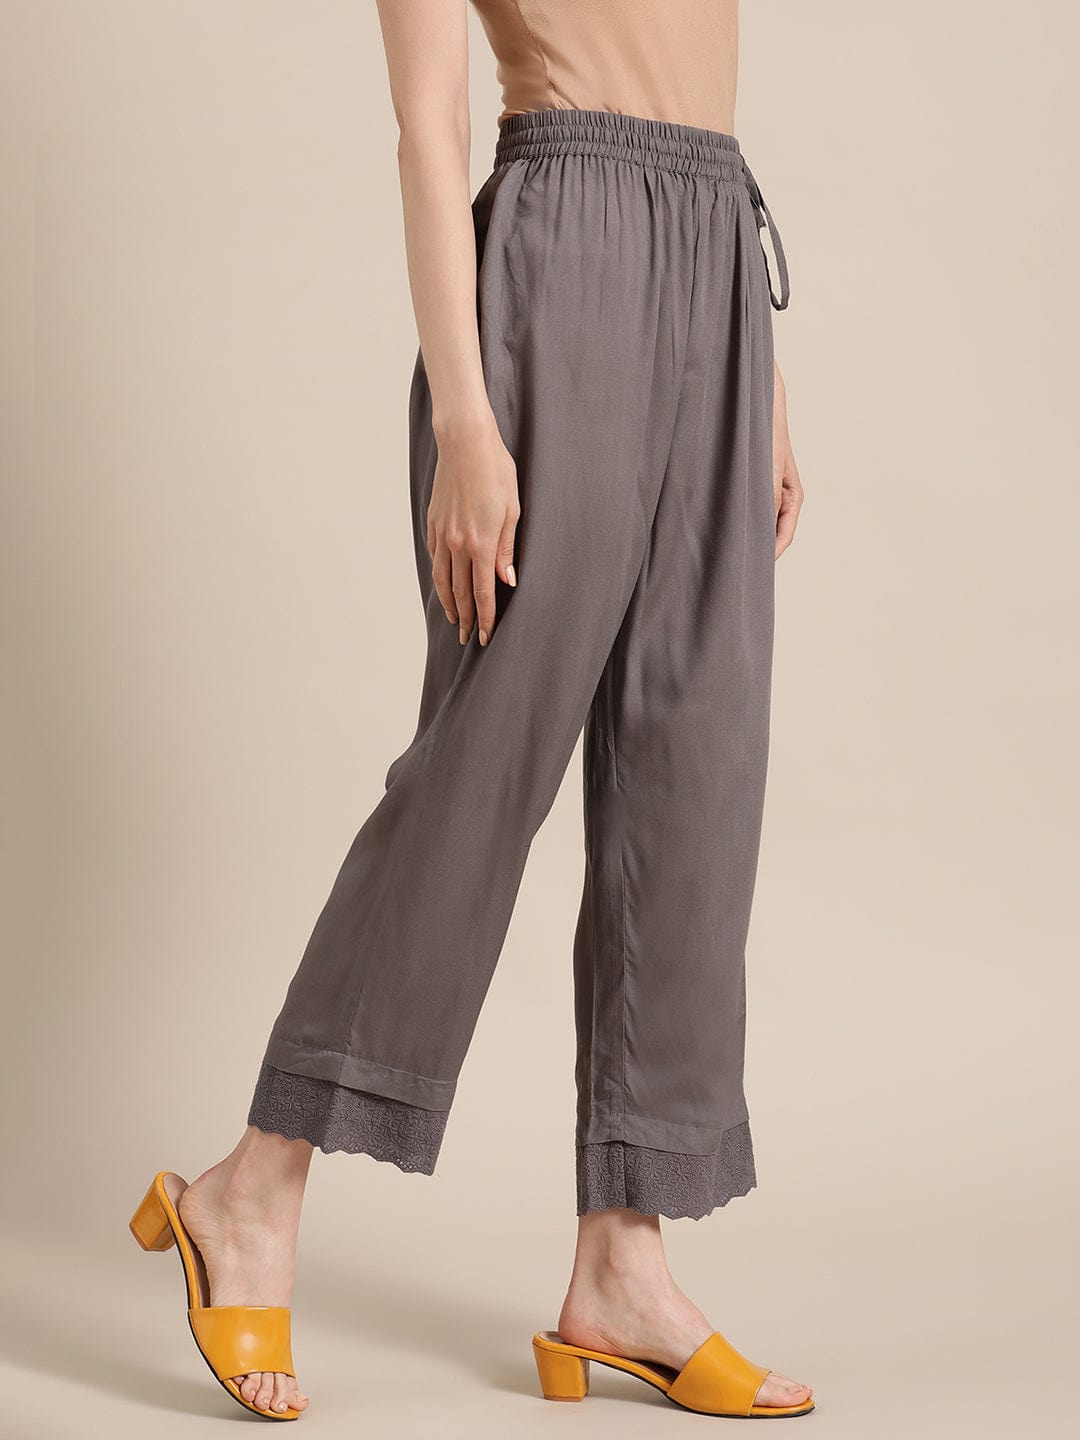 Capri Pants for Women Plus Size, Cotton Linen Capri India | Ubuy